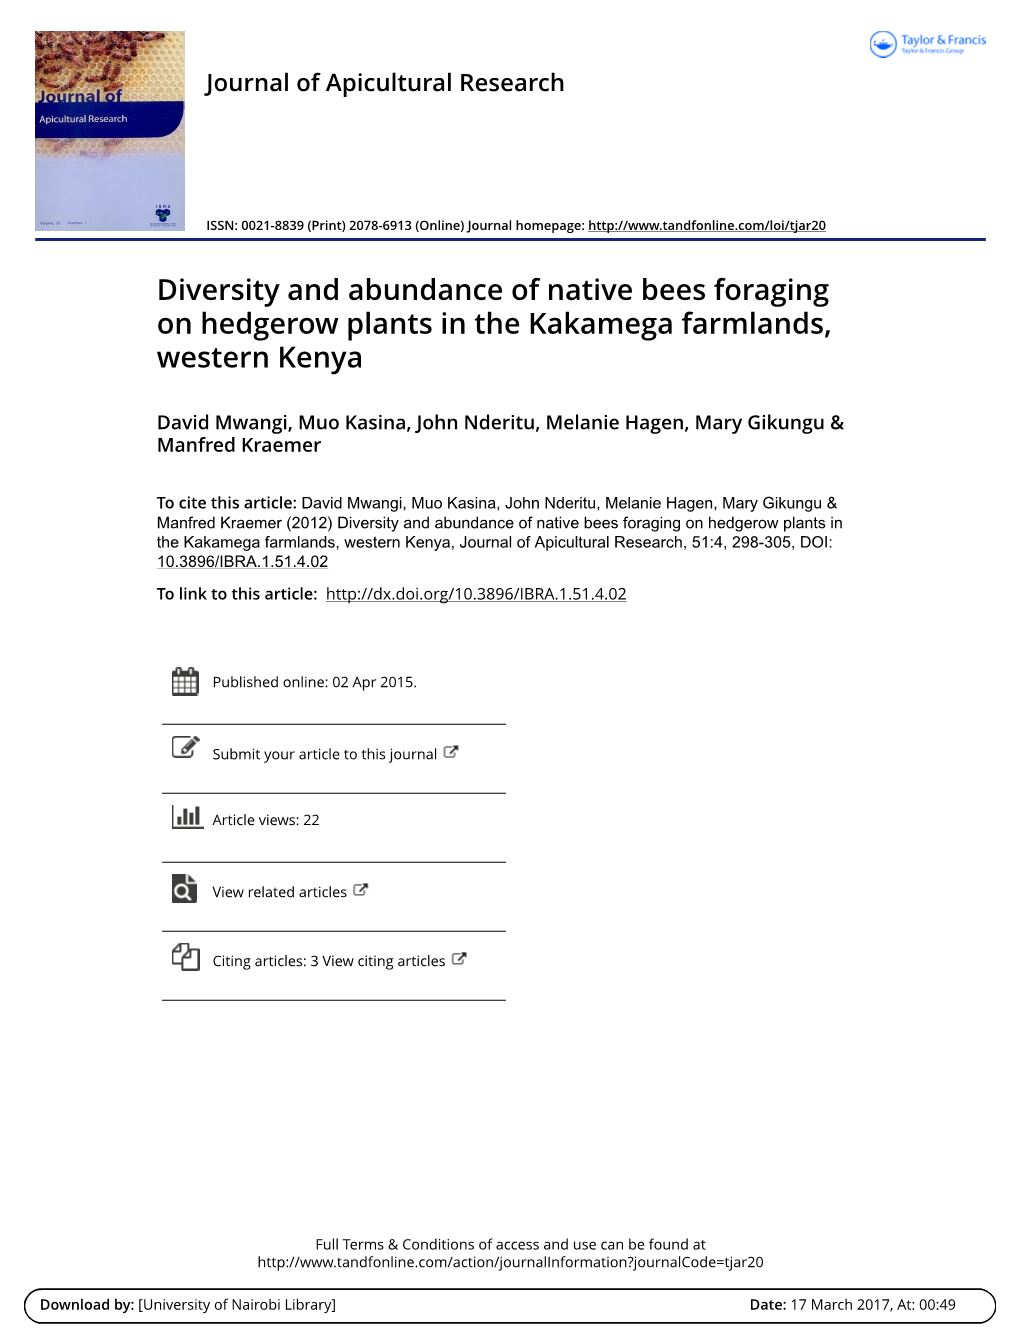 Diversity and Abundance of Native Bees Foraging on Hedgerow Plants in the Kakamega Farmlands, Western Kenya